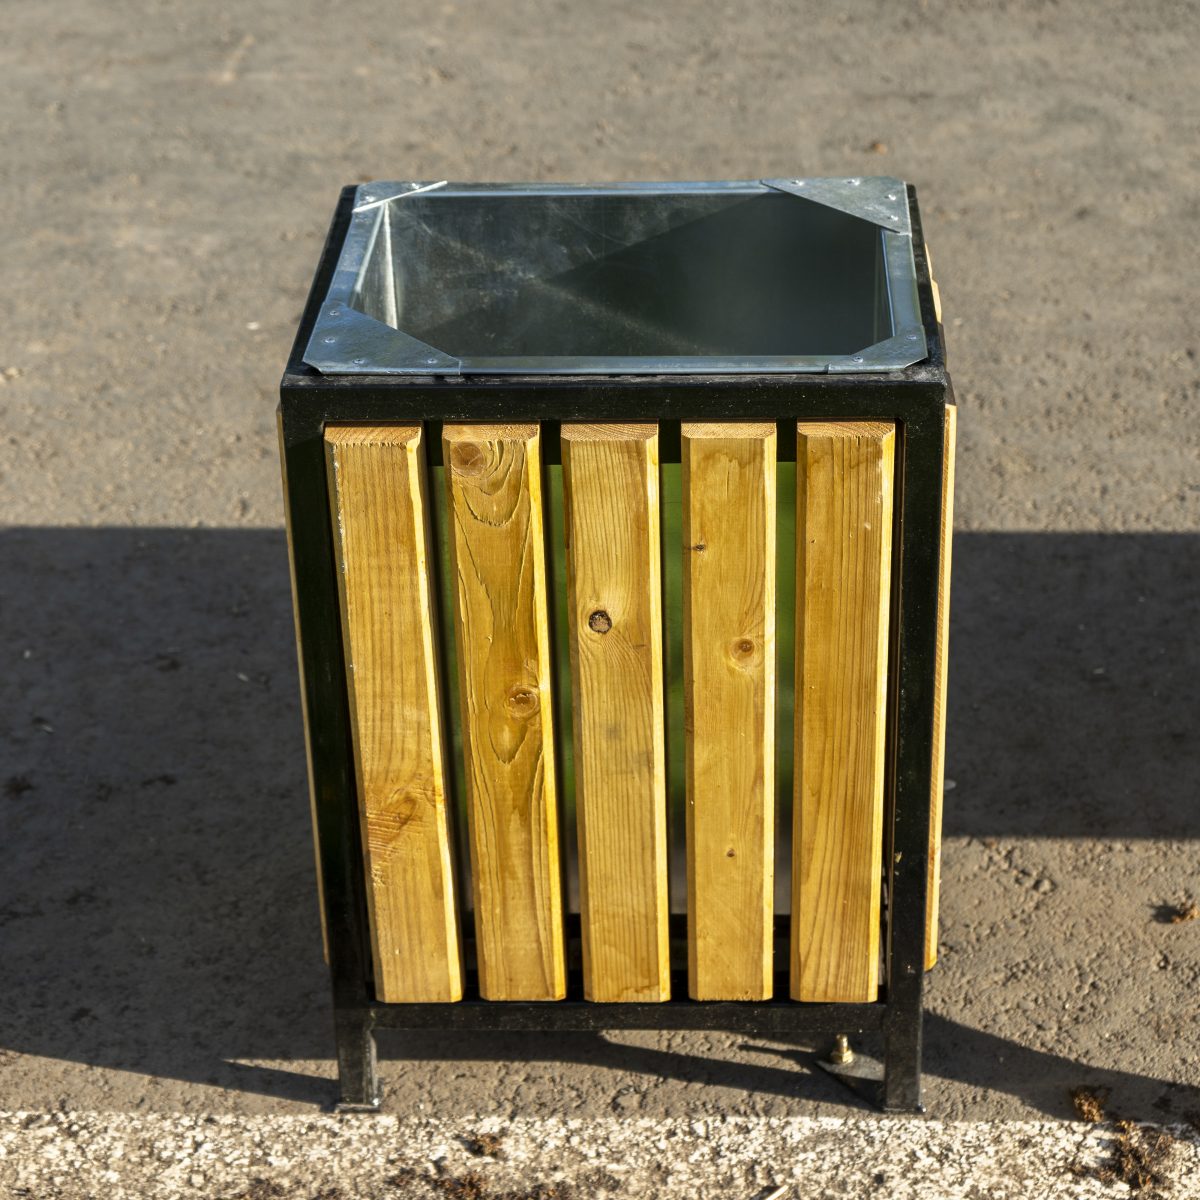 https://storables.com/wp-content/uploads/2020/10/wooden-trash-can-enclosure-1200x1200.jpeg